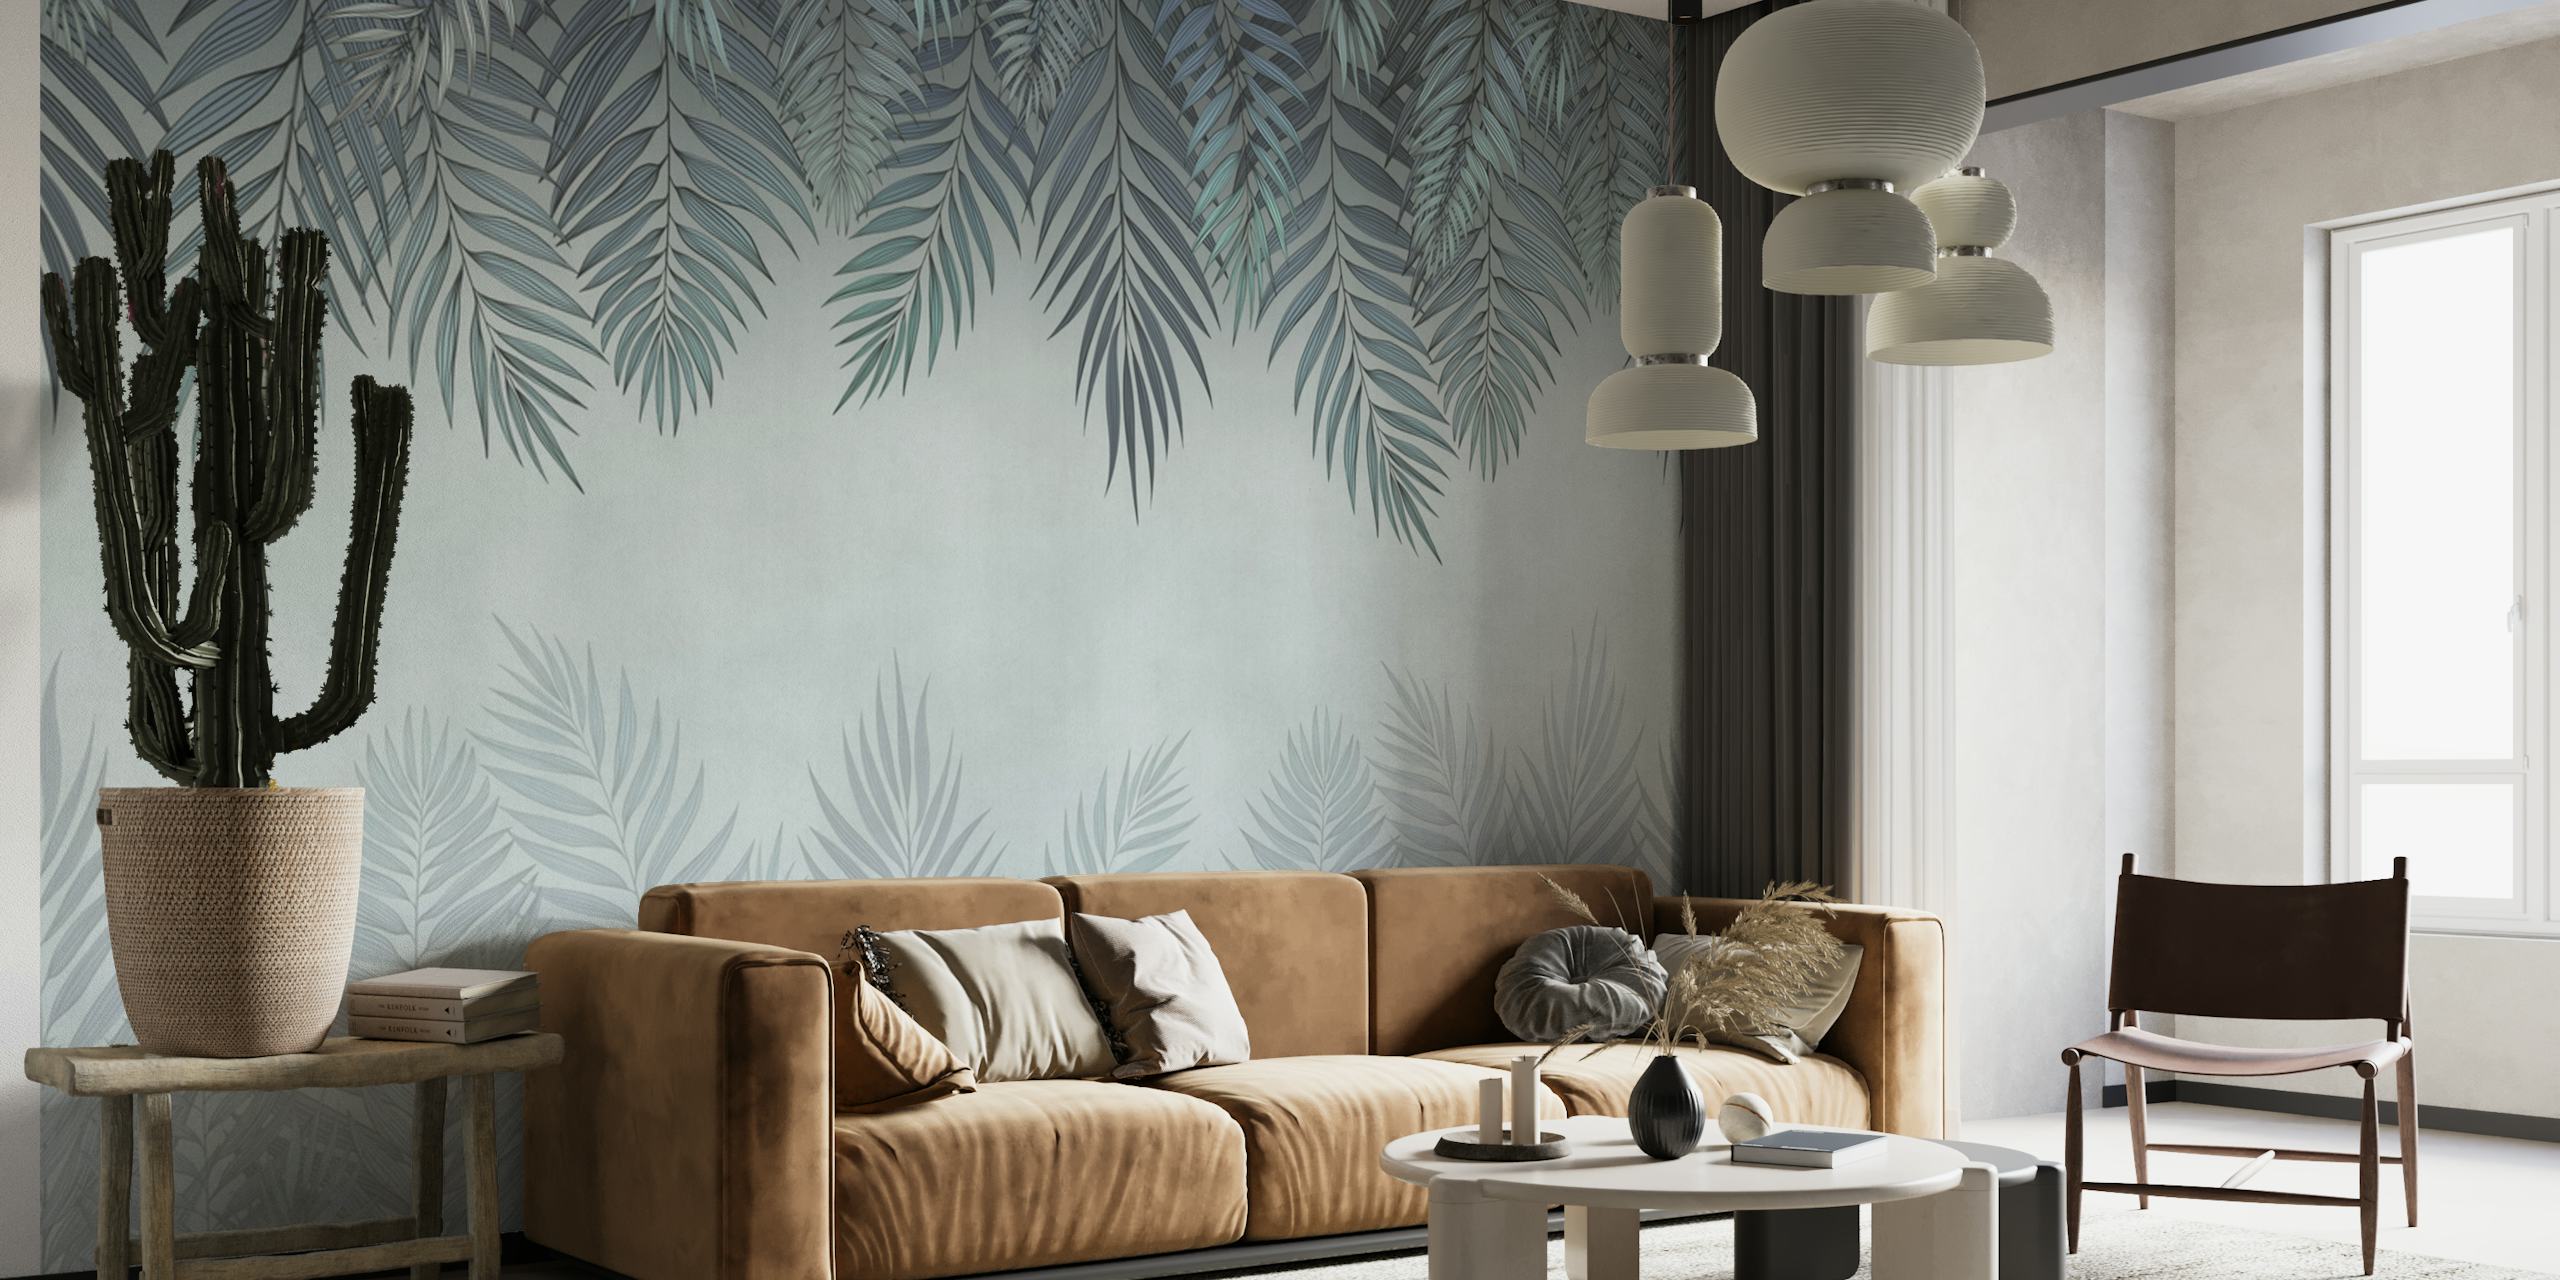 Pale blue palm leaves wallpaper